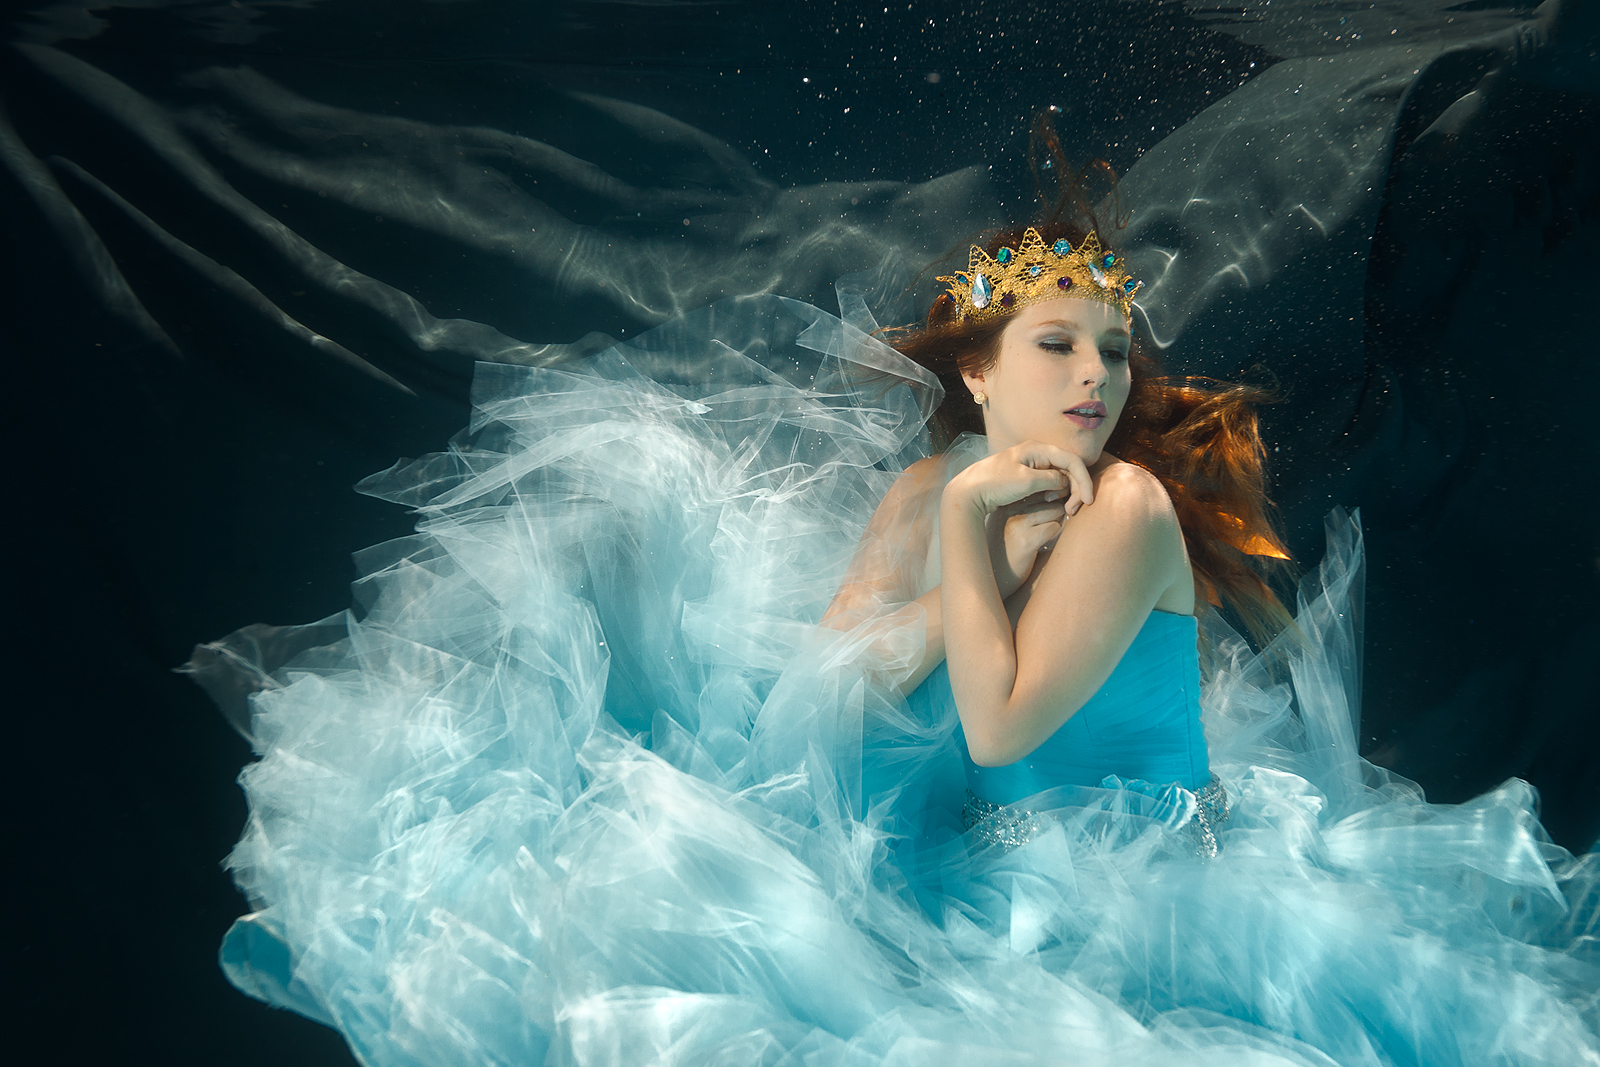 marcosvaldés|FOTÓGRAFO® underwater portrait photographer